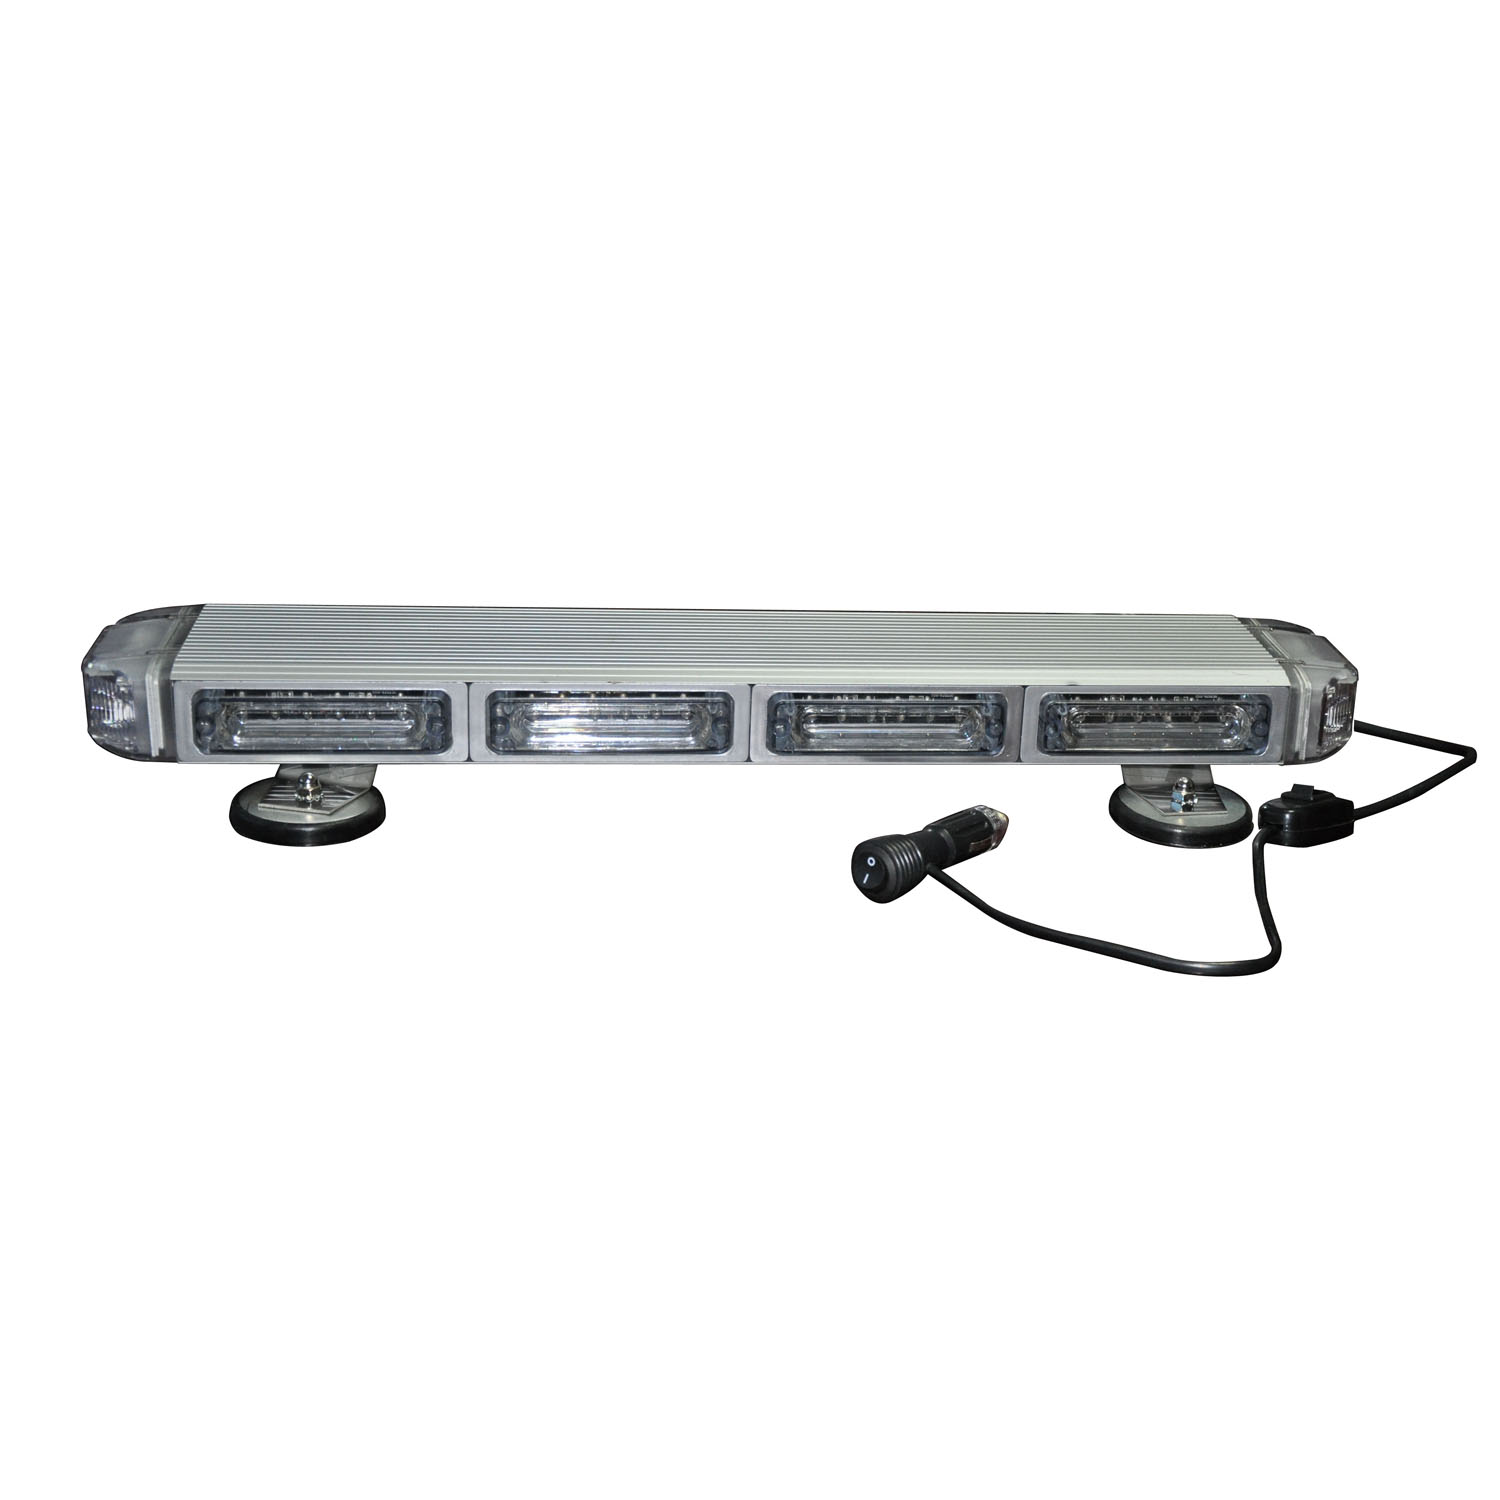 TBD-M560 LED mini lightbar